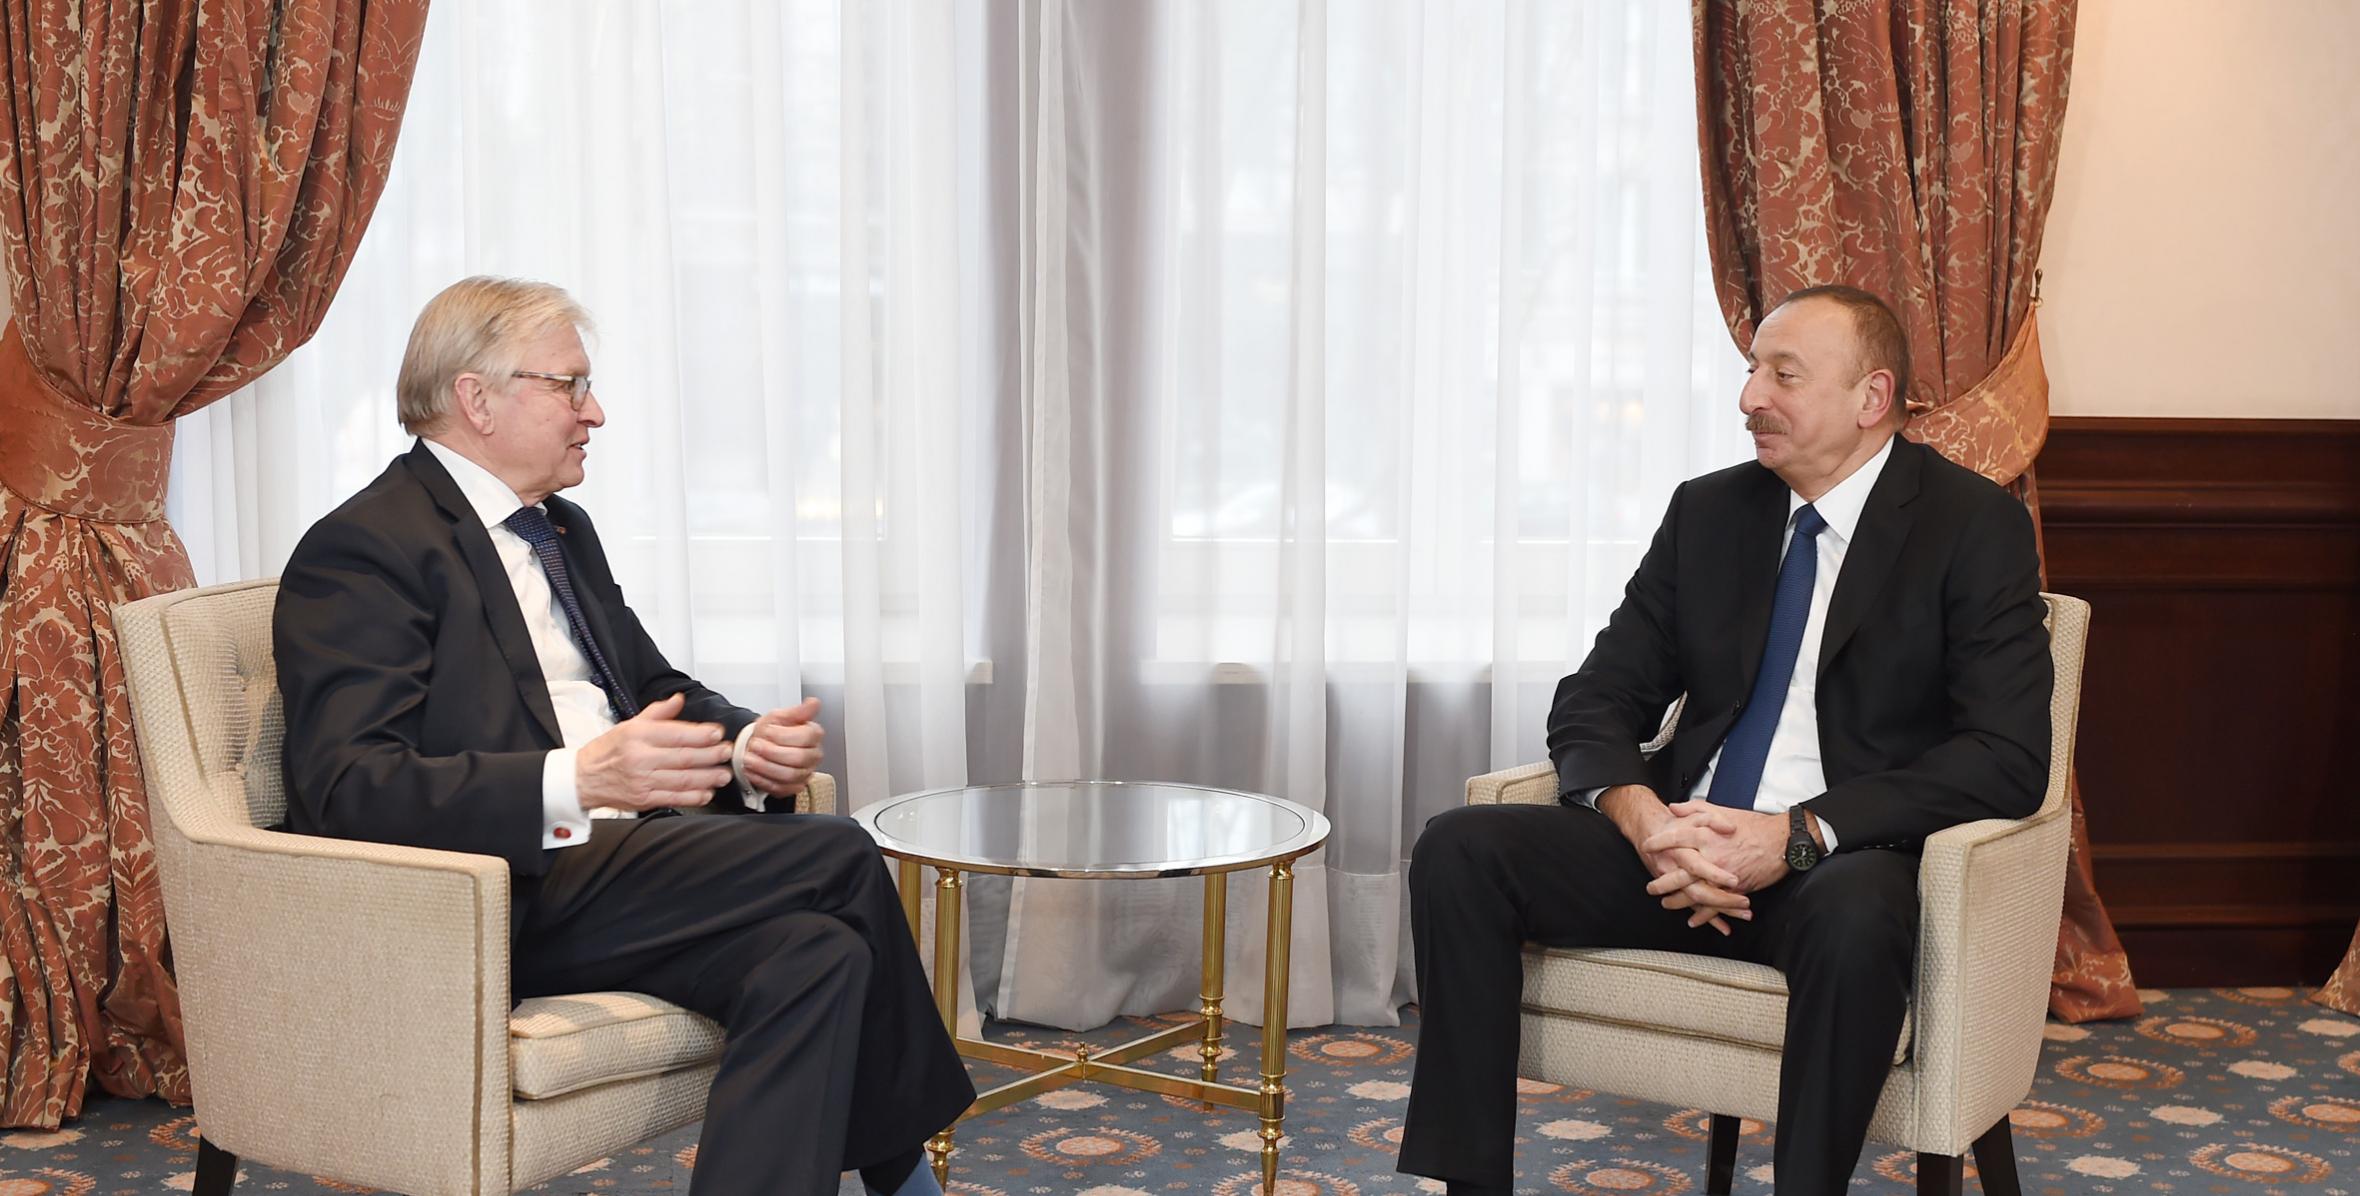 Ilham Aliyev met with former PACE president Rene van der Linden in Brussels